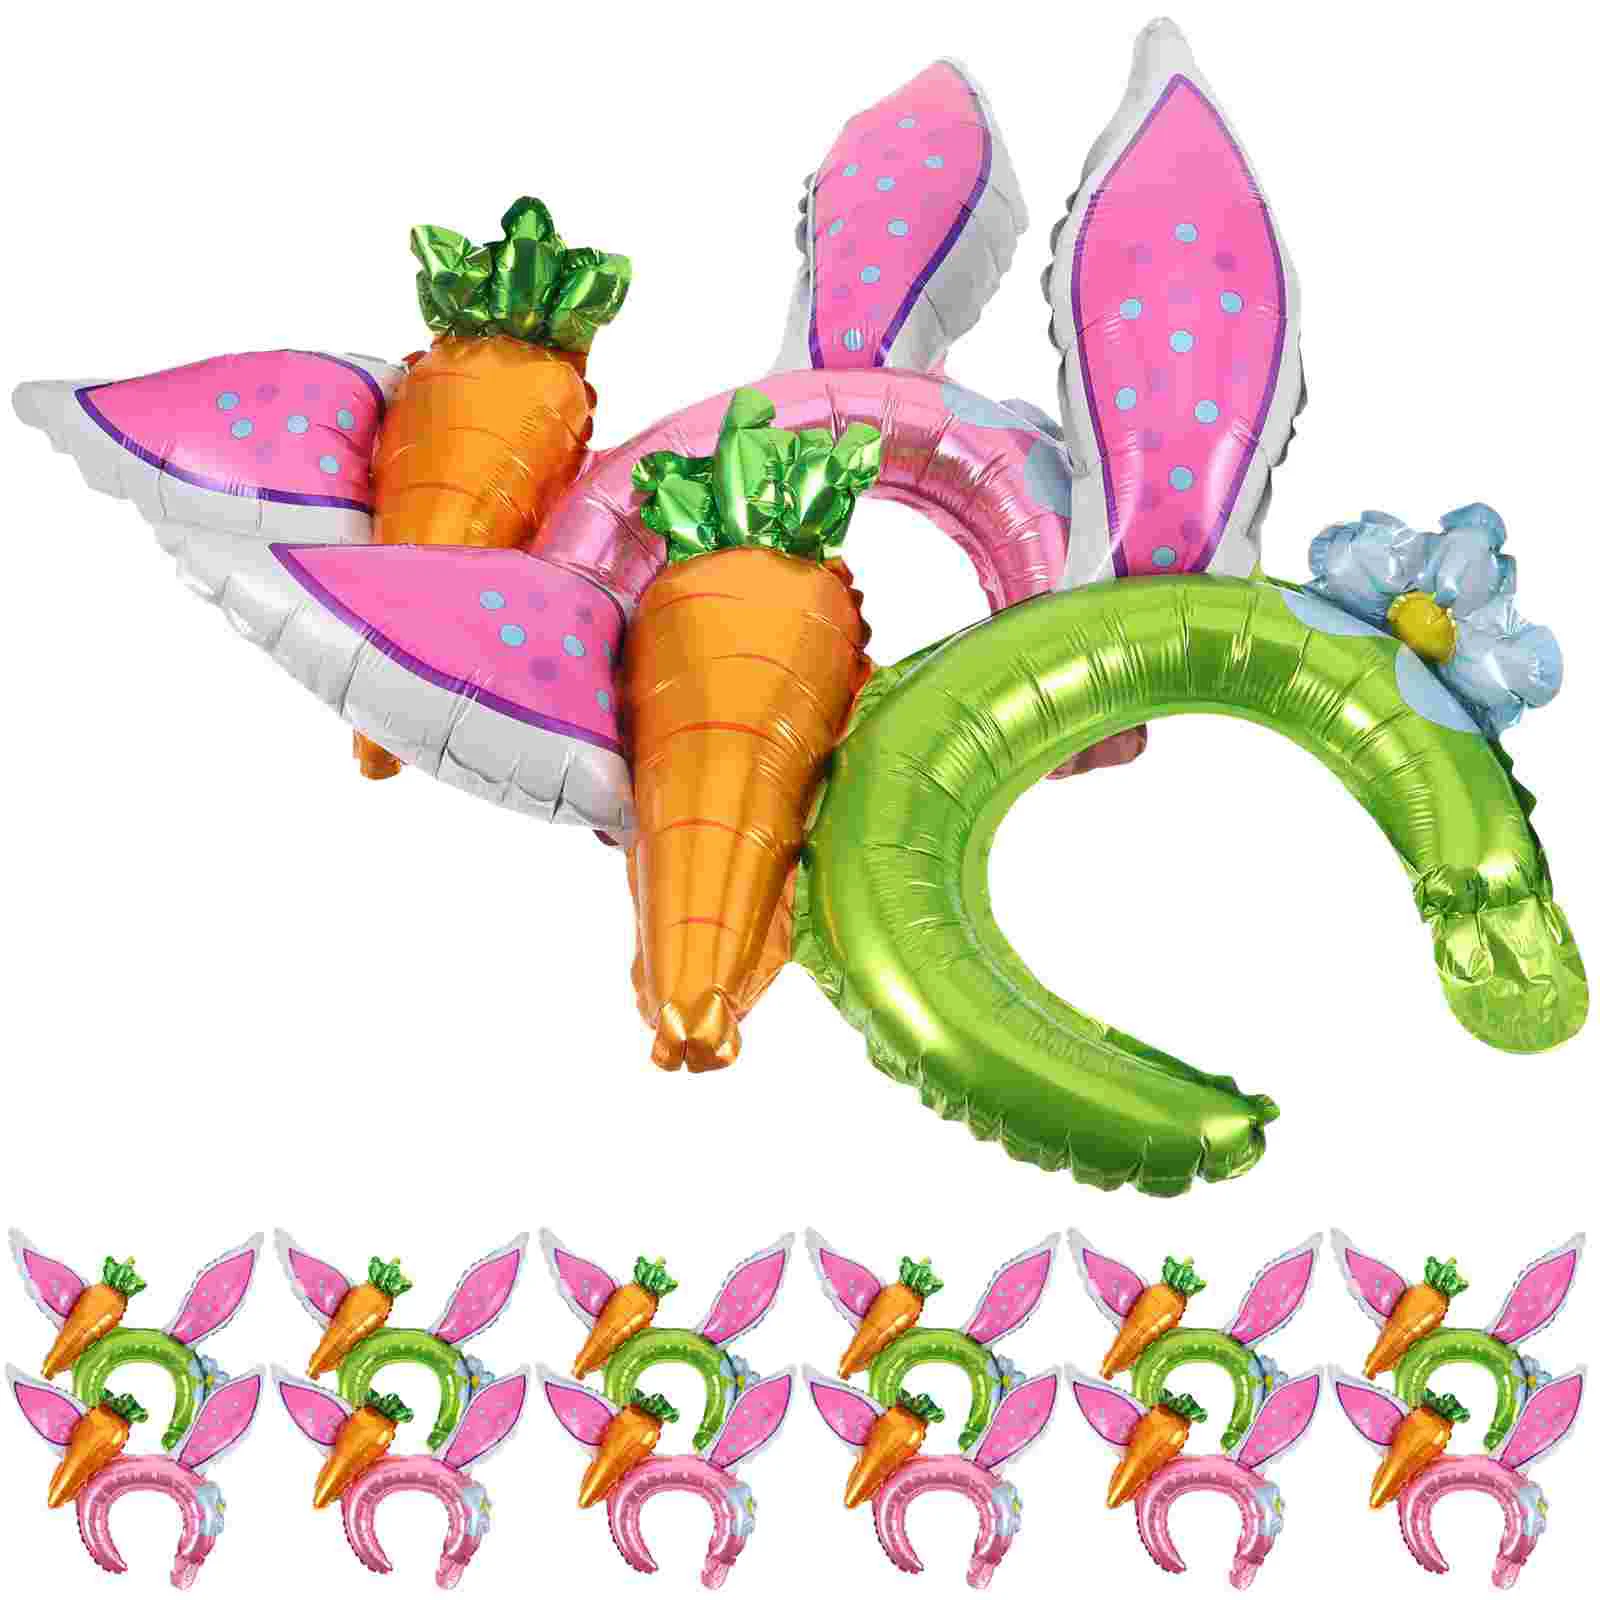 

20 Pcs Gifts Rabbit Ears Headdress Cartoon Design Hairbands Carrot Easter Headbands Photo Props Party Favors Decorations Child